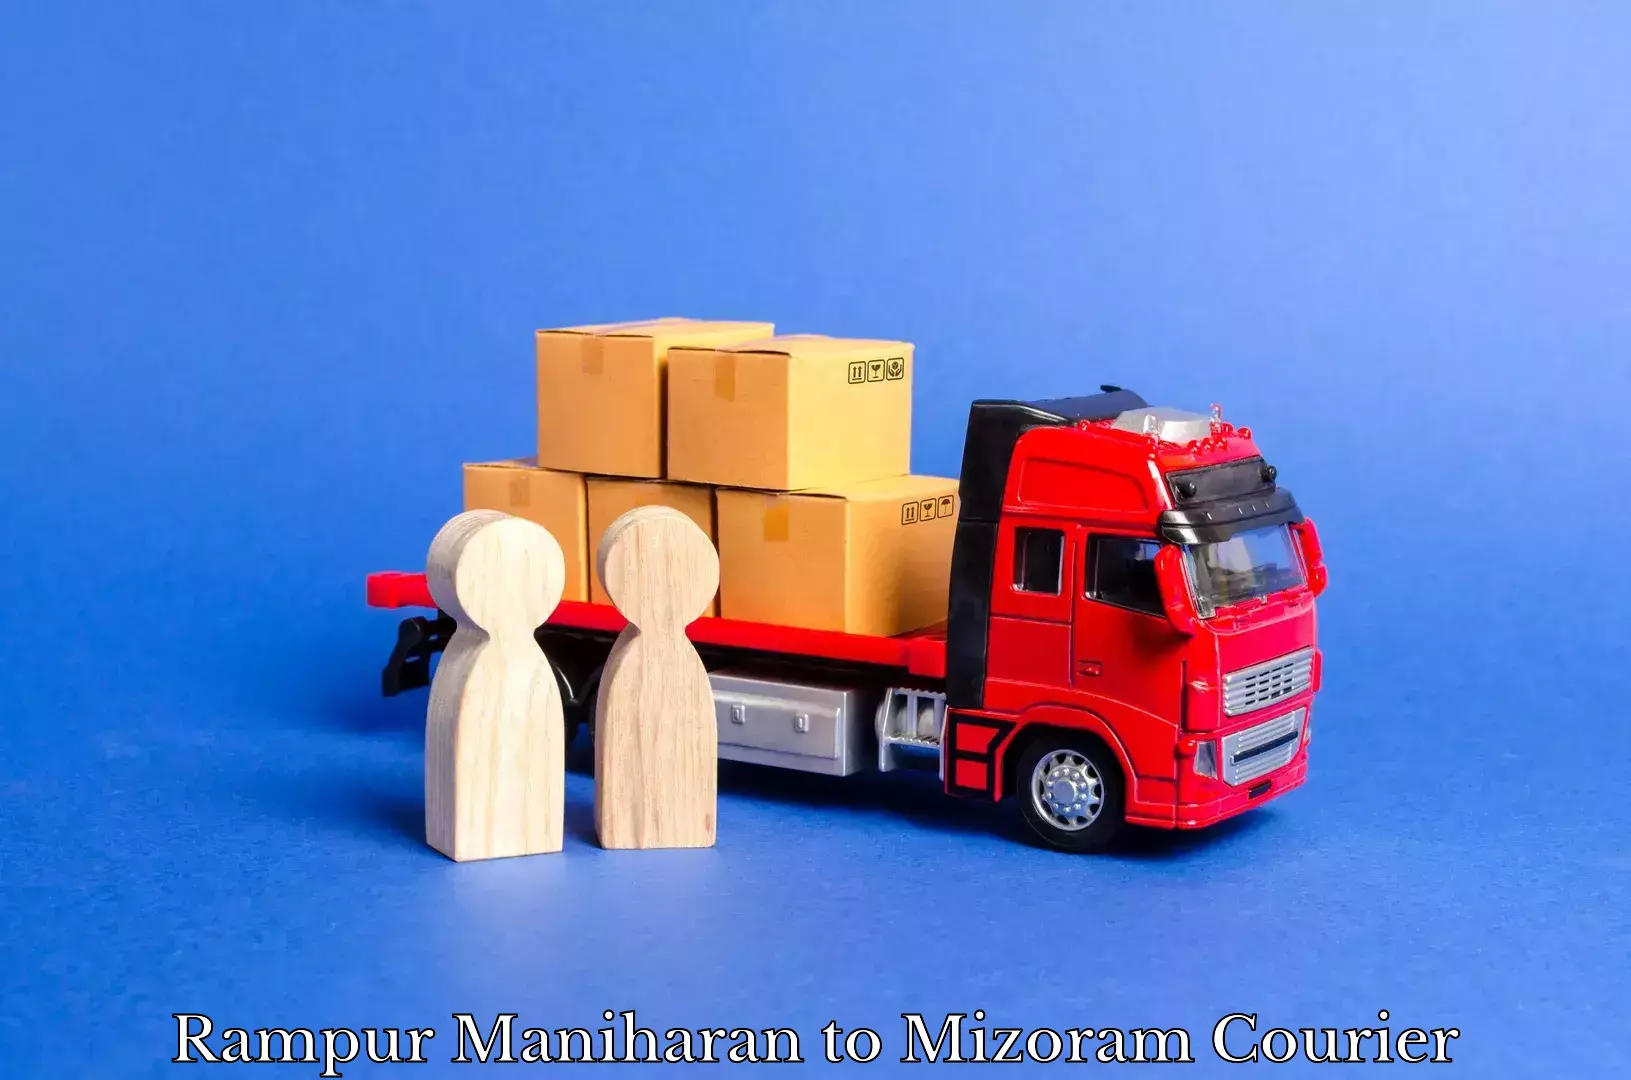 Urgent courier needs Rampur Maniharan to Mizoram